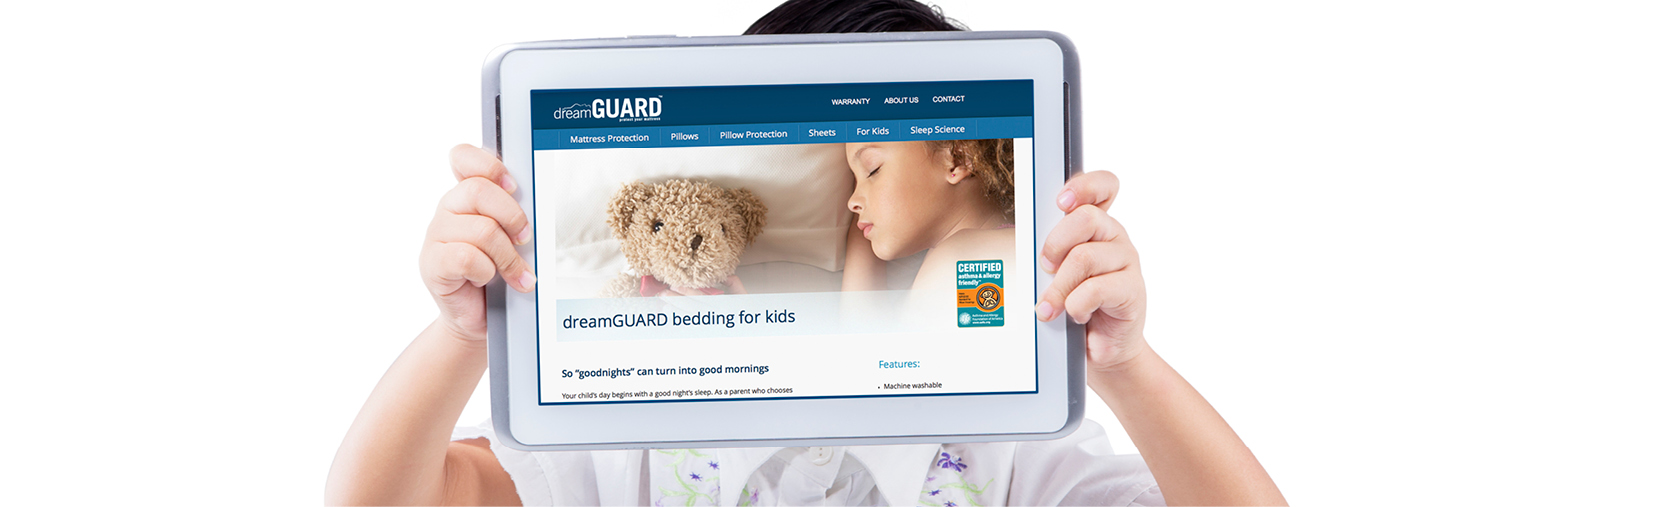 Dreamguard responsive website